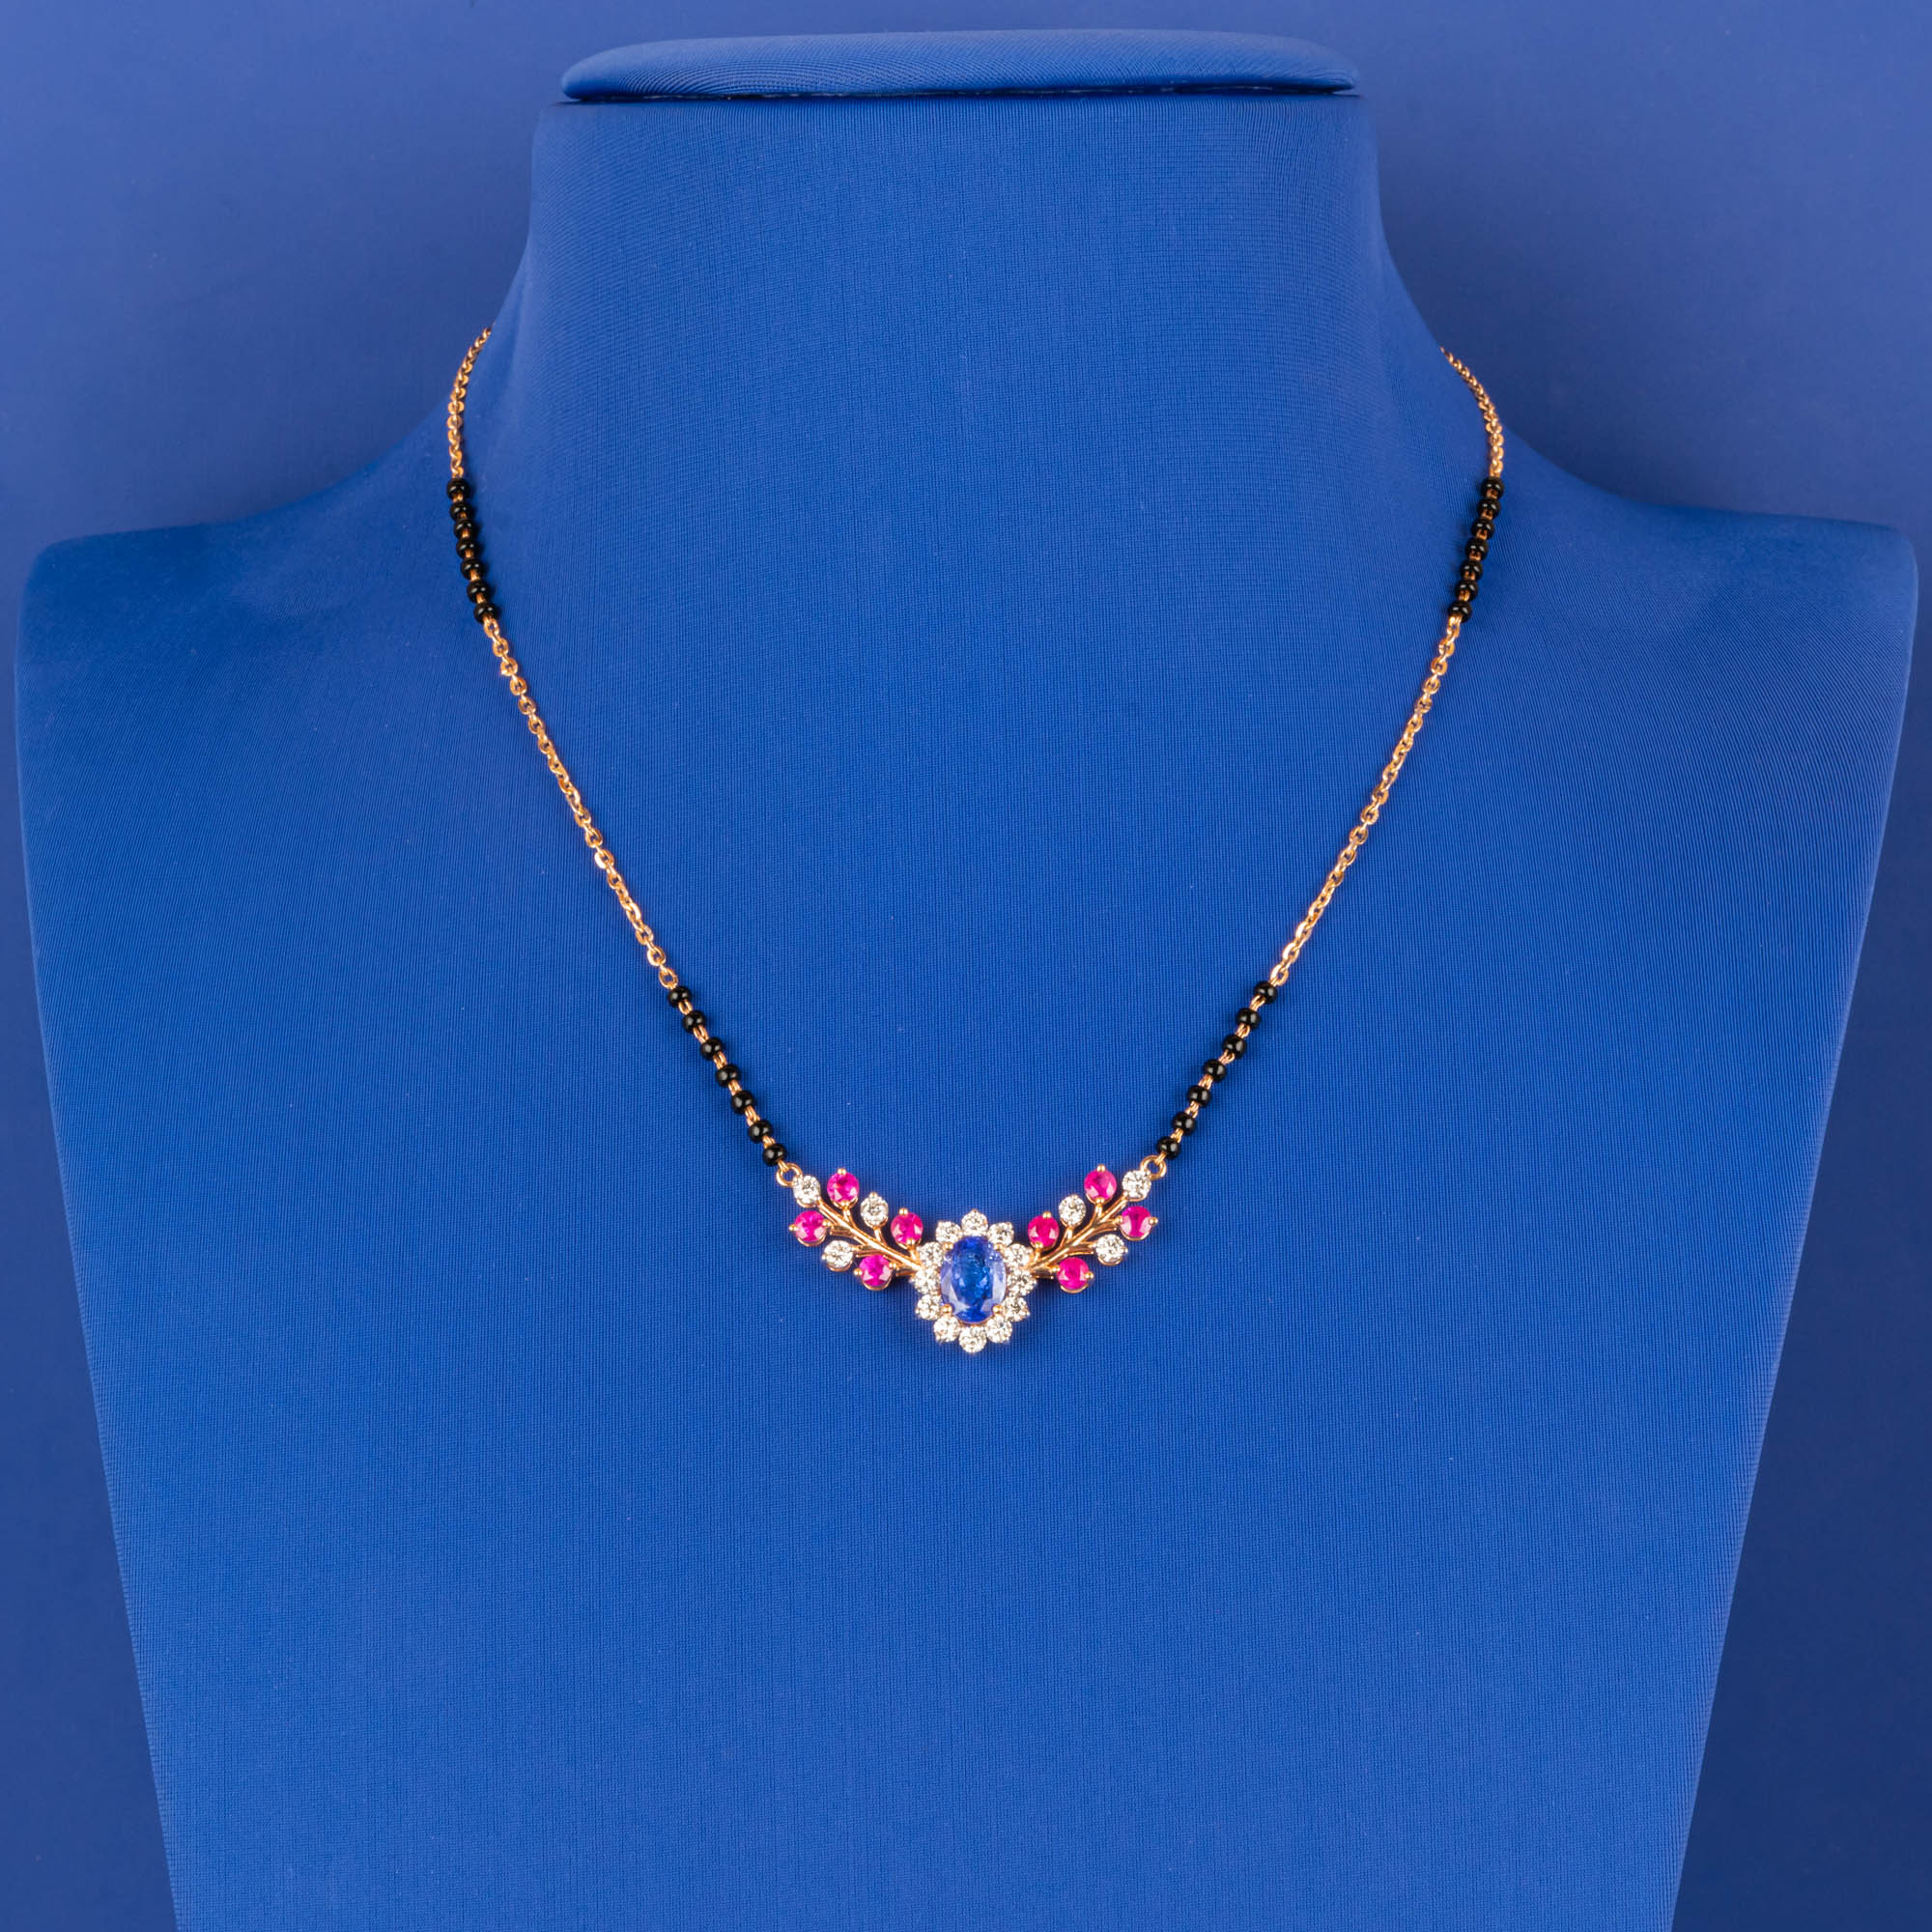 Twilight Glow: Handmade 18K Rose Gold Diamond Mangalsutra Necklace with Black Beads